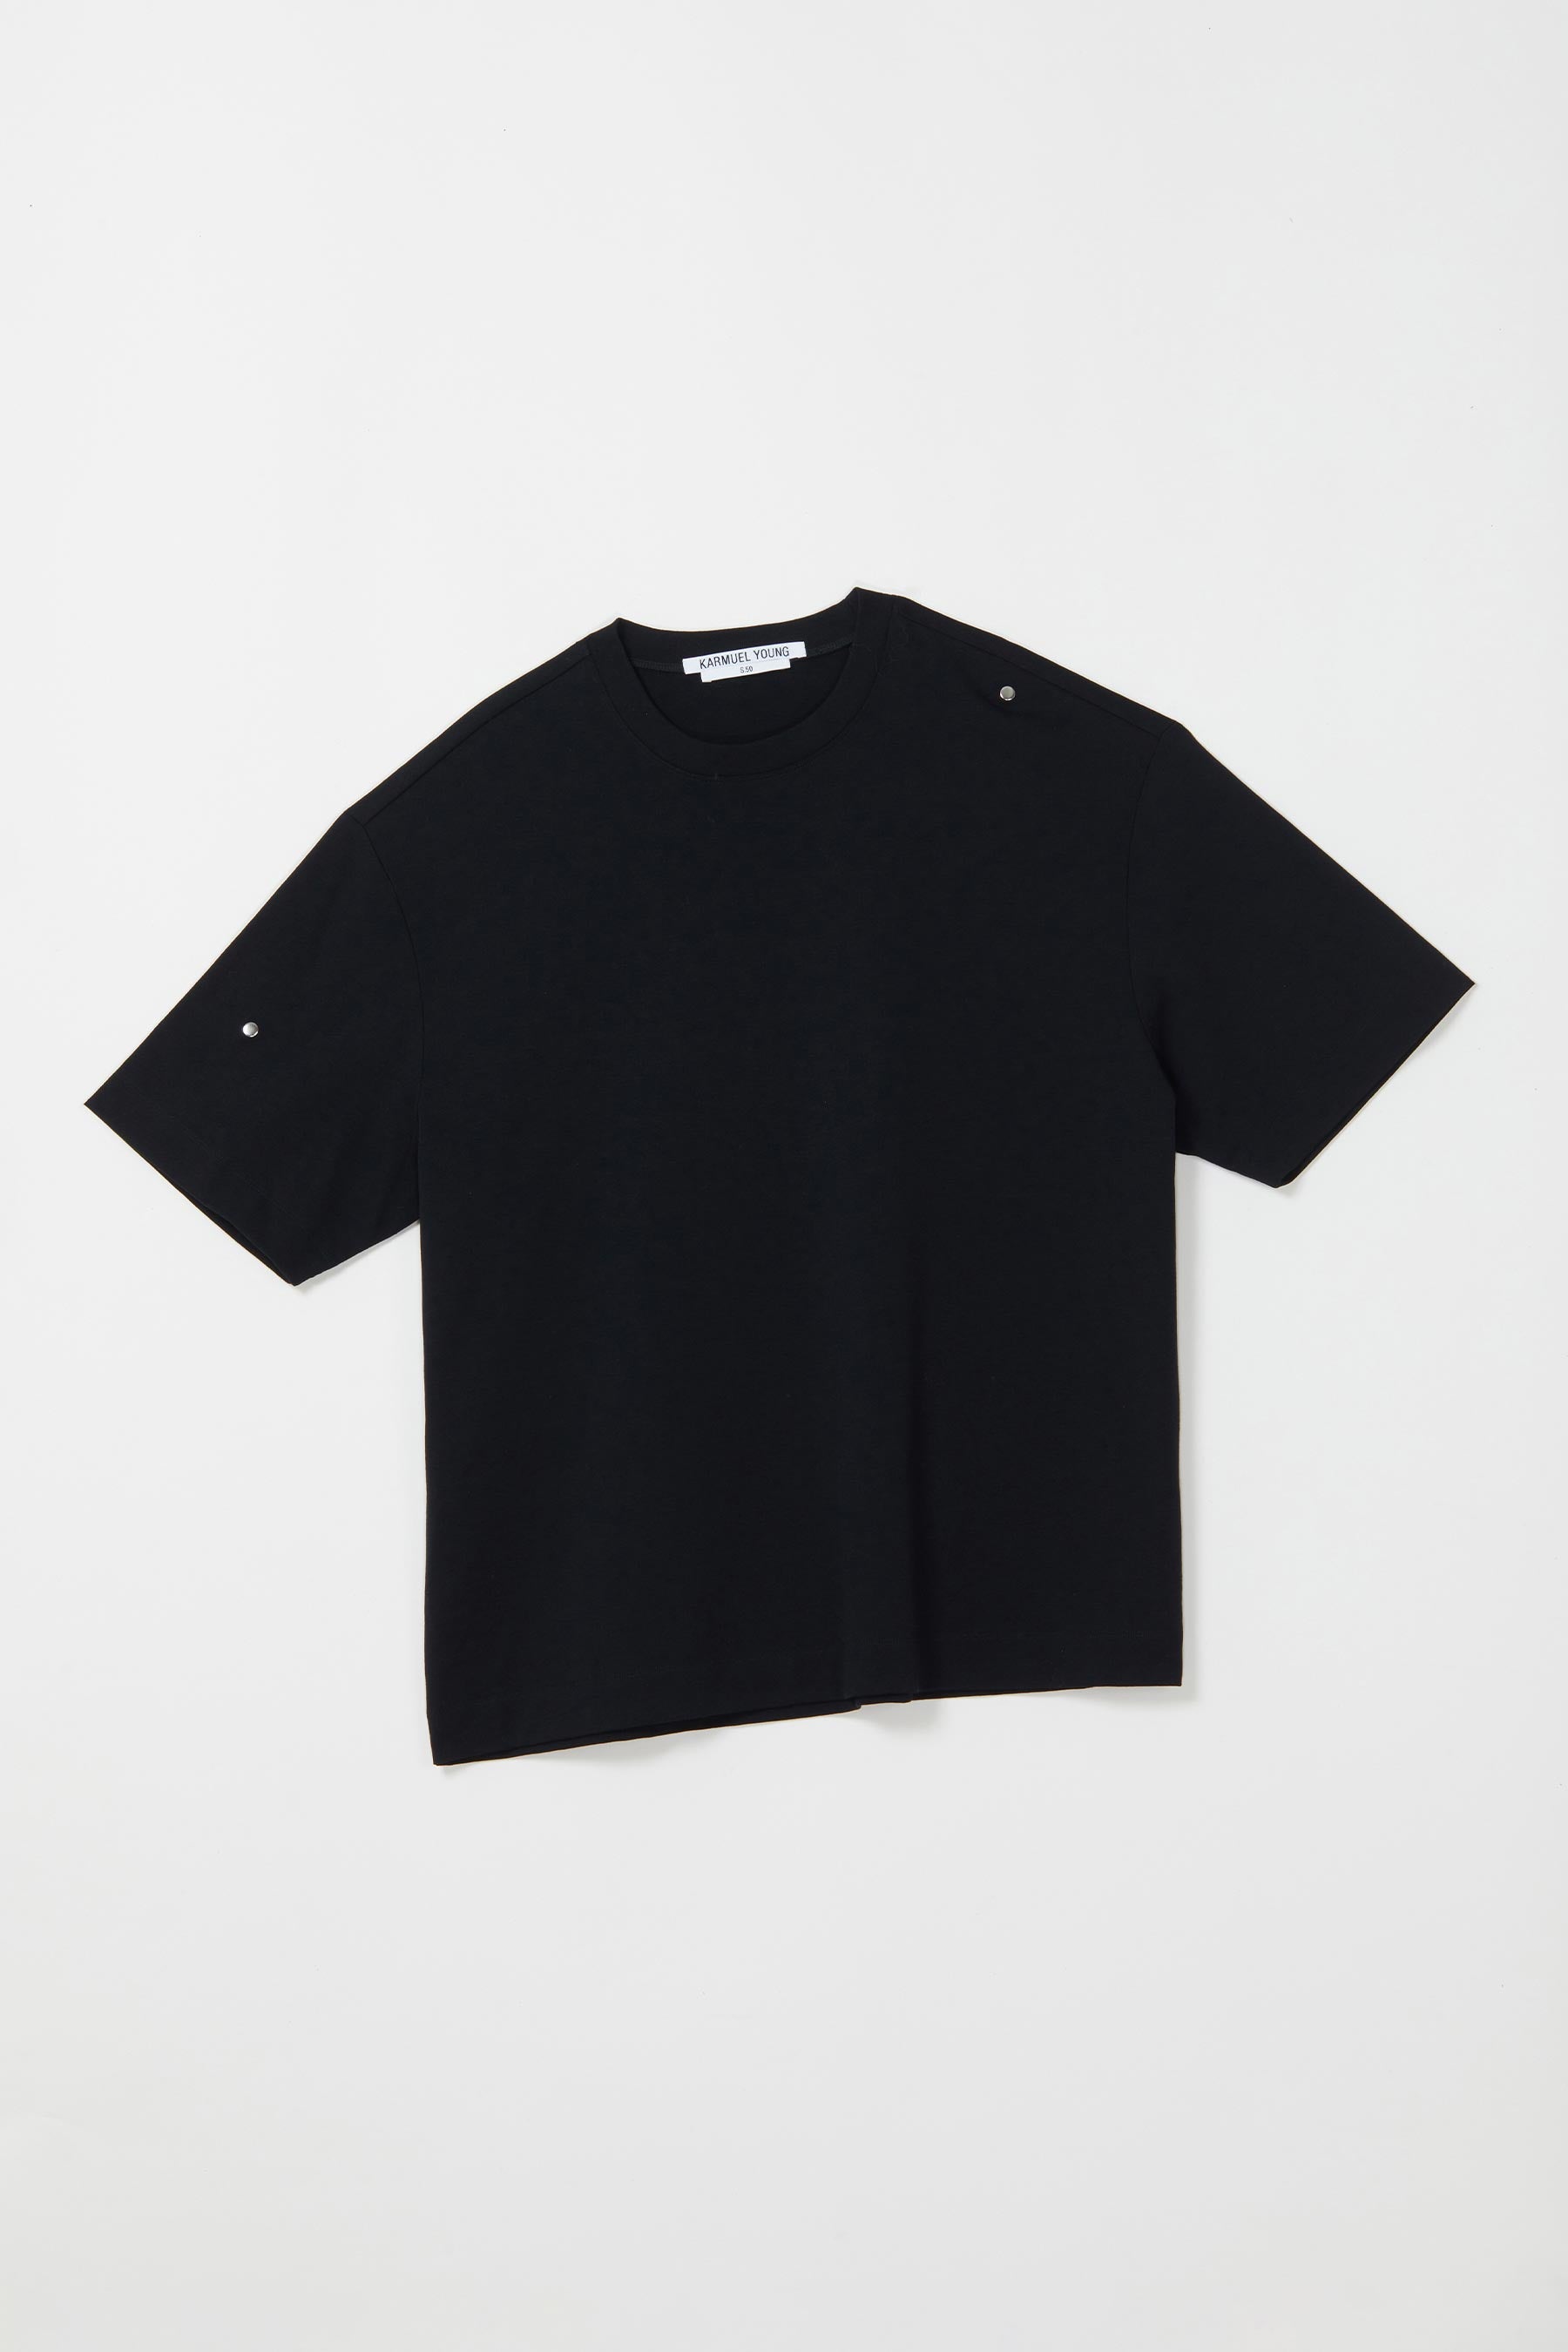 Black Cotton Square Rotated T-Shirt